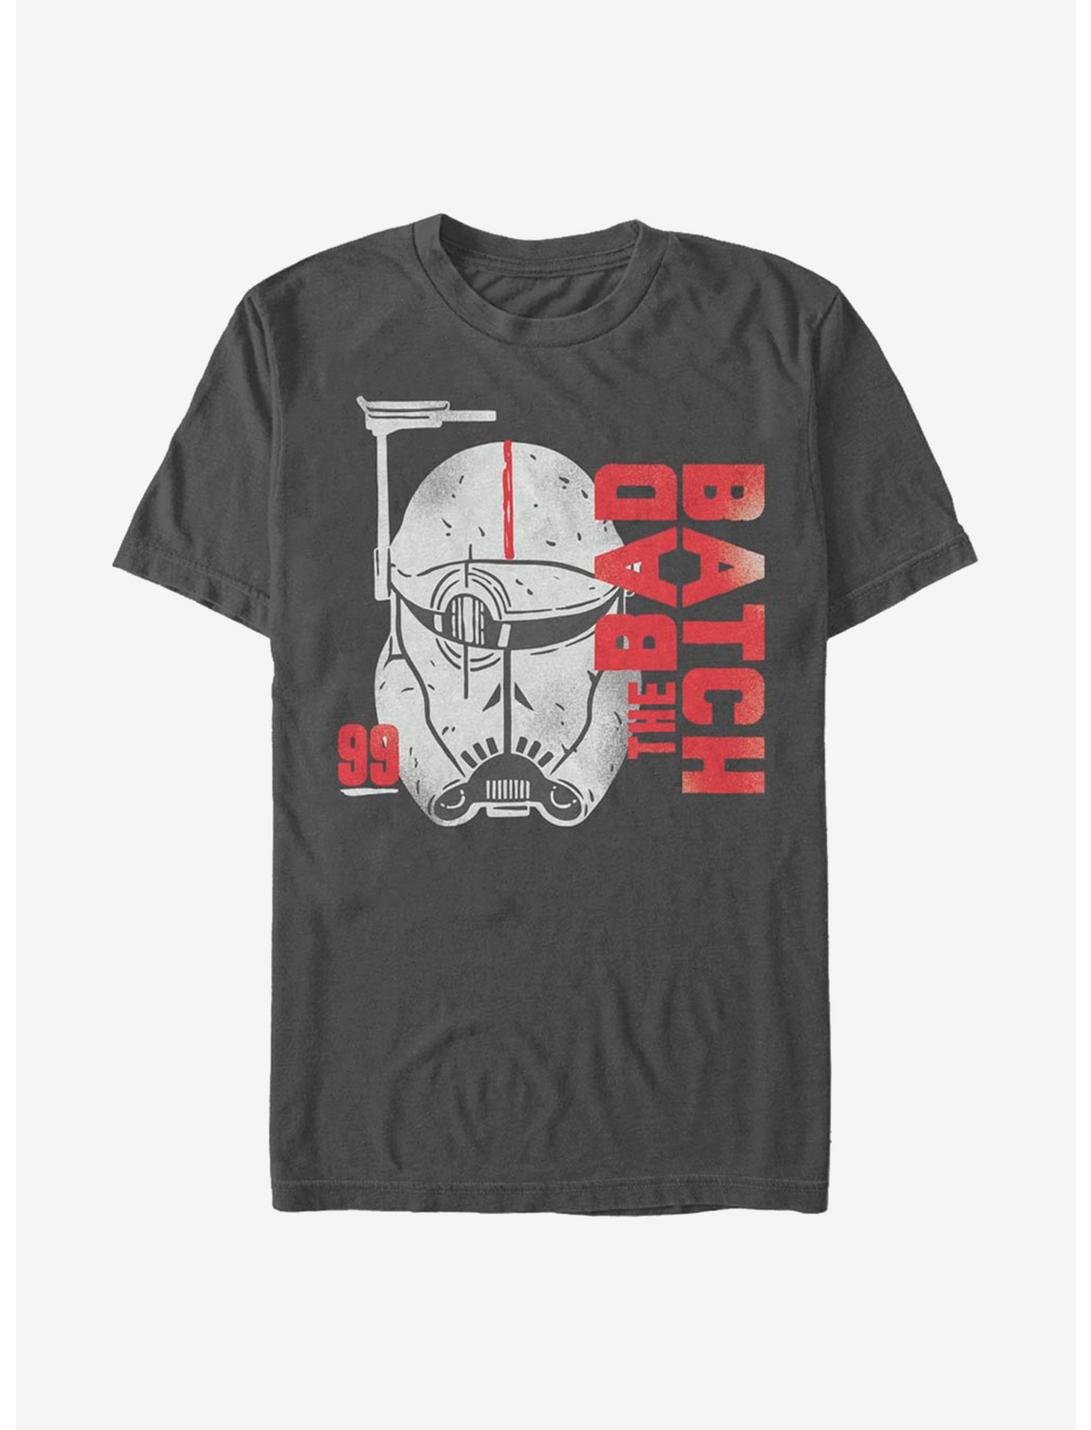 Star Wars: The Bad Batch Unit 99 T-Shirt, CHARCOAL, hi-res